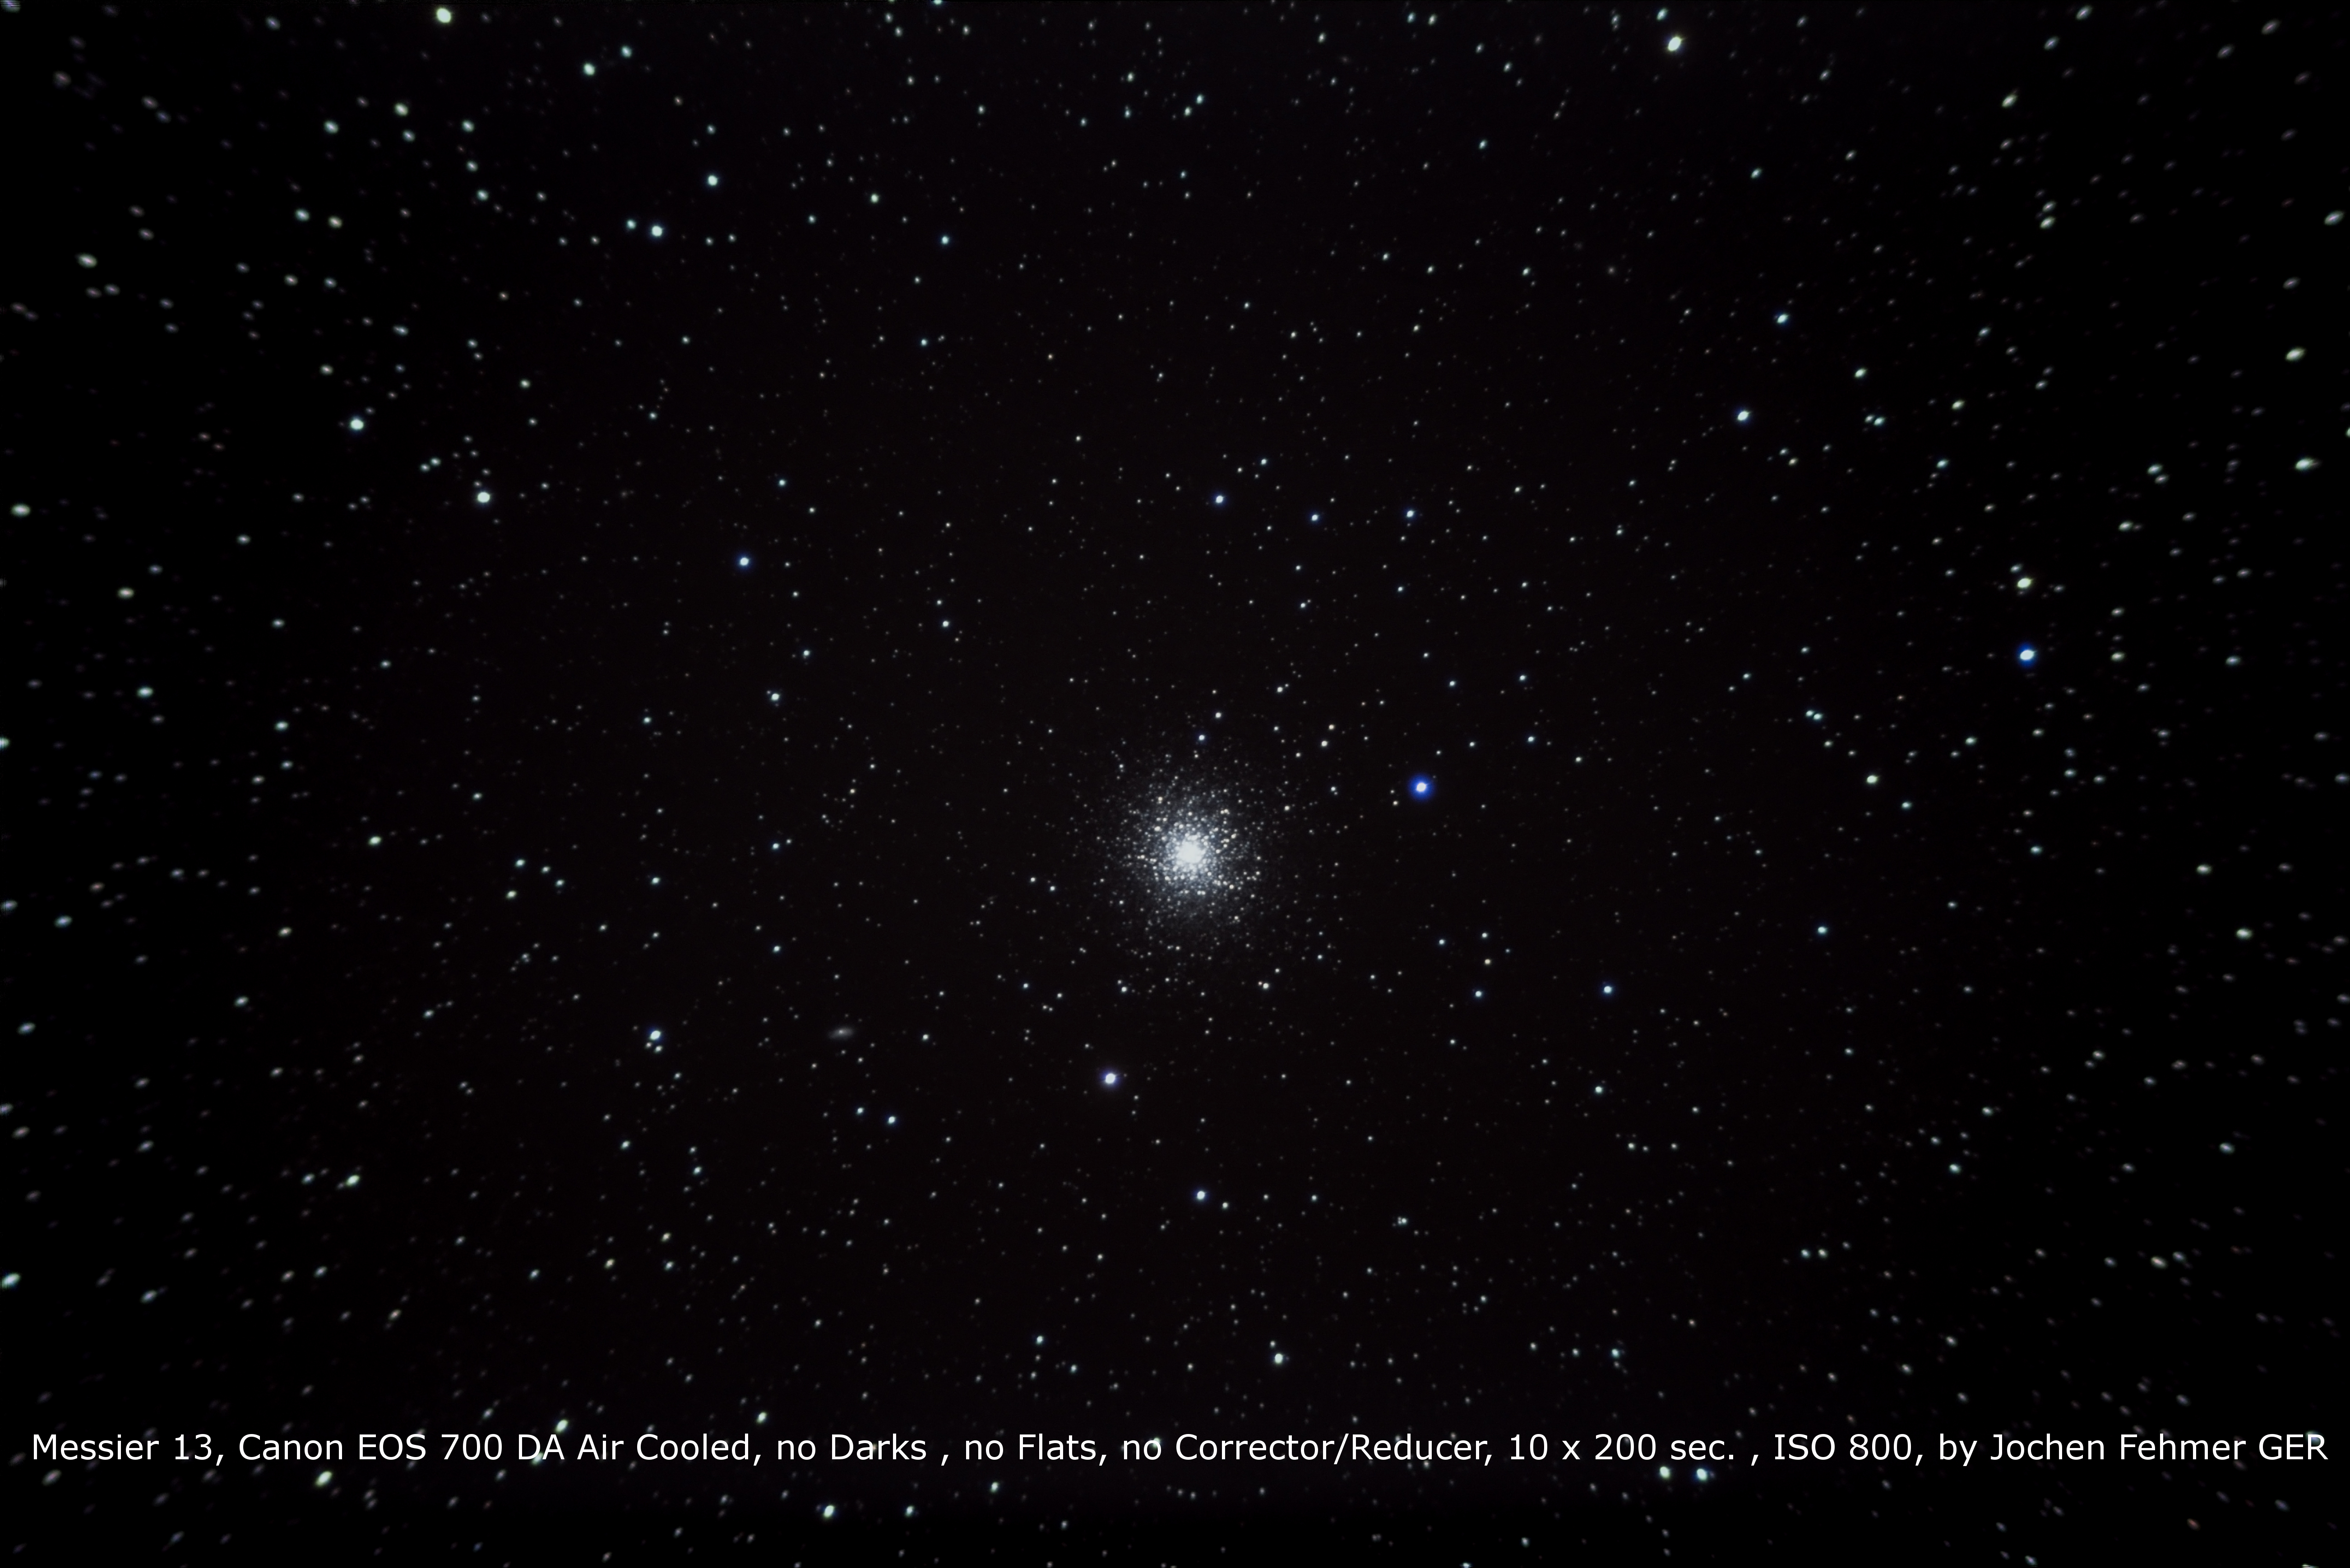 BRESSER Messier AR-102xs/460 EXOS-2/EQ5